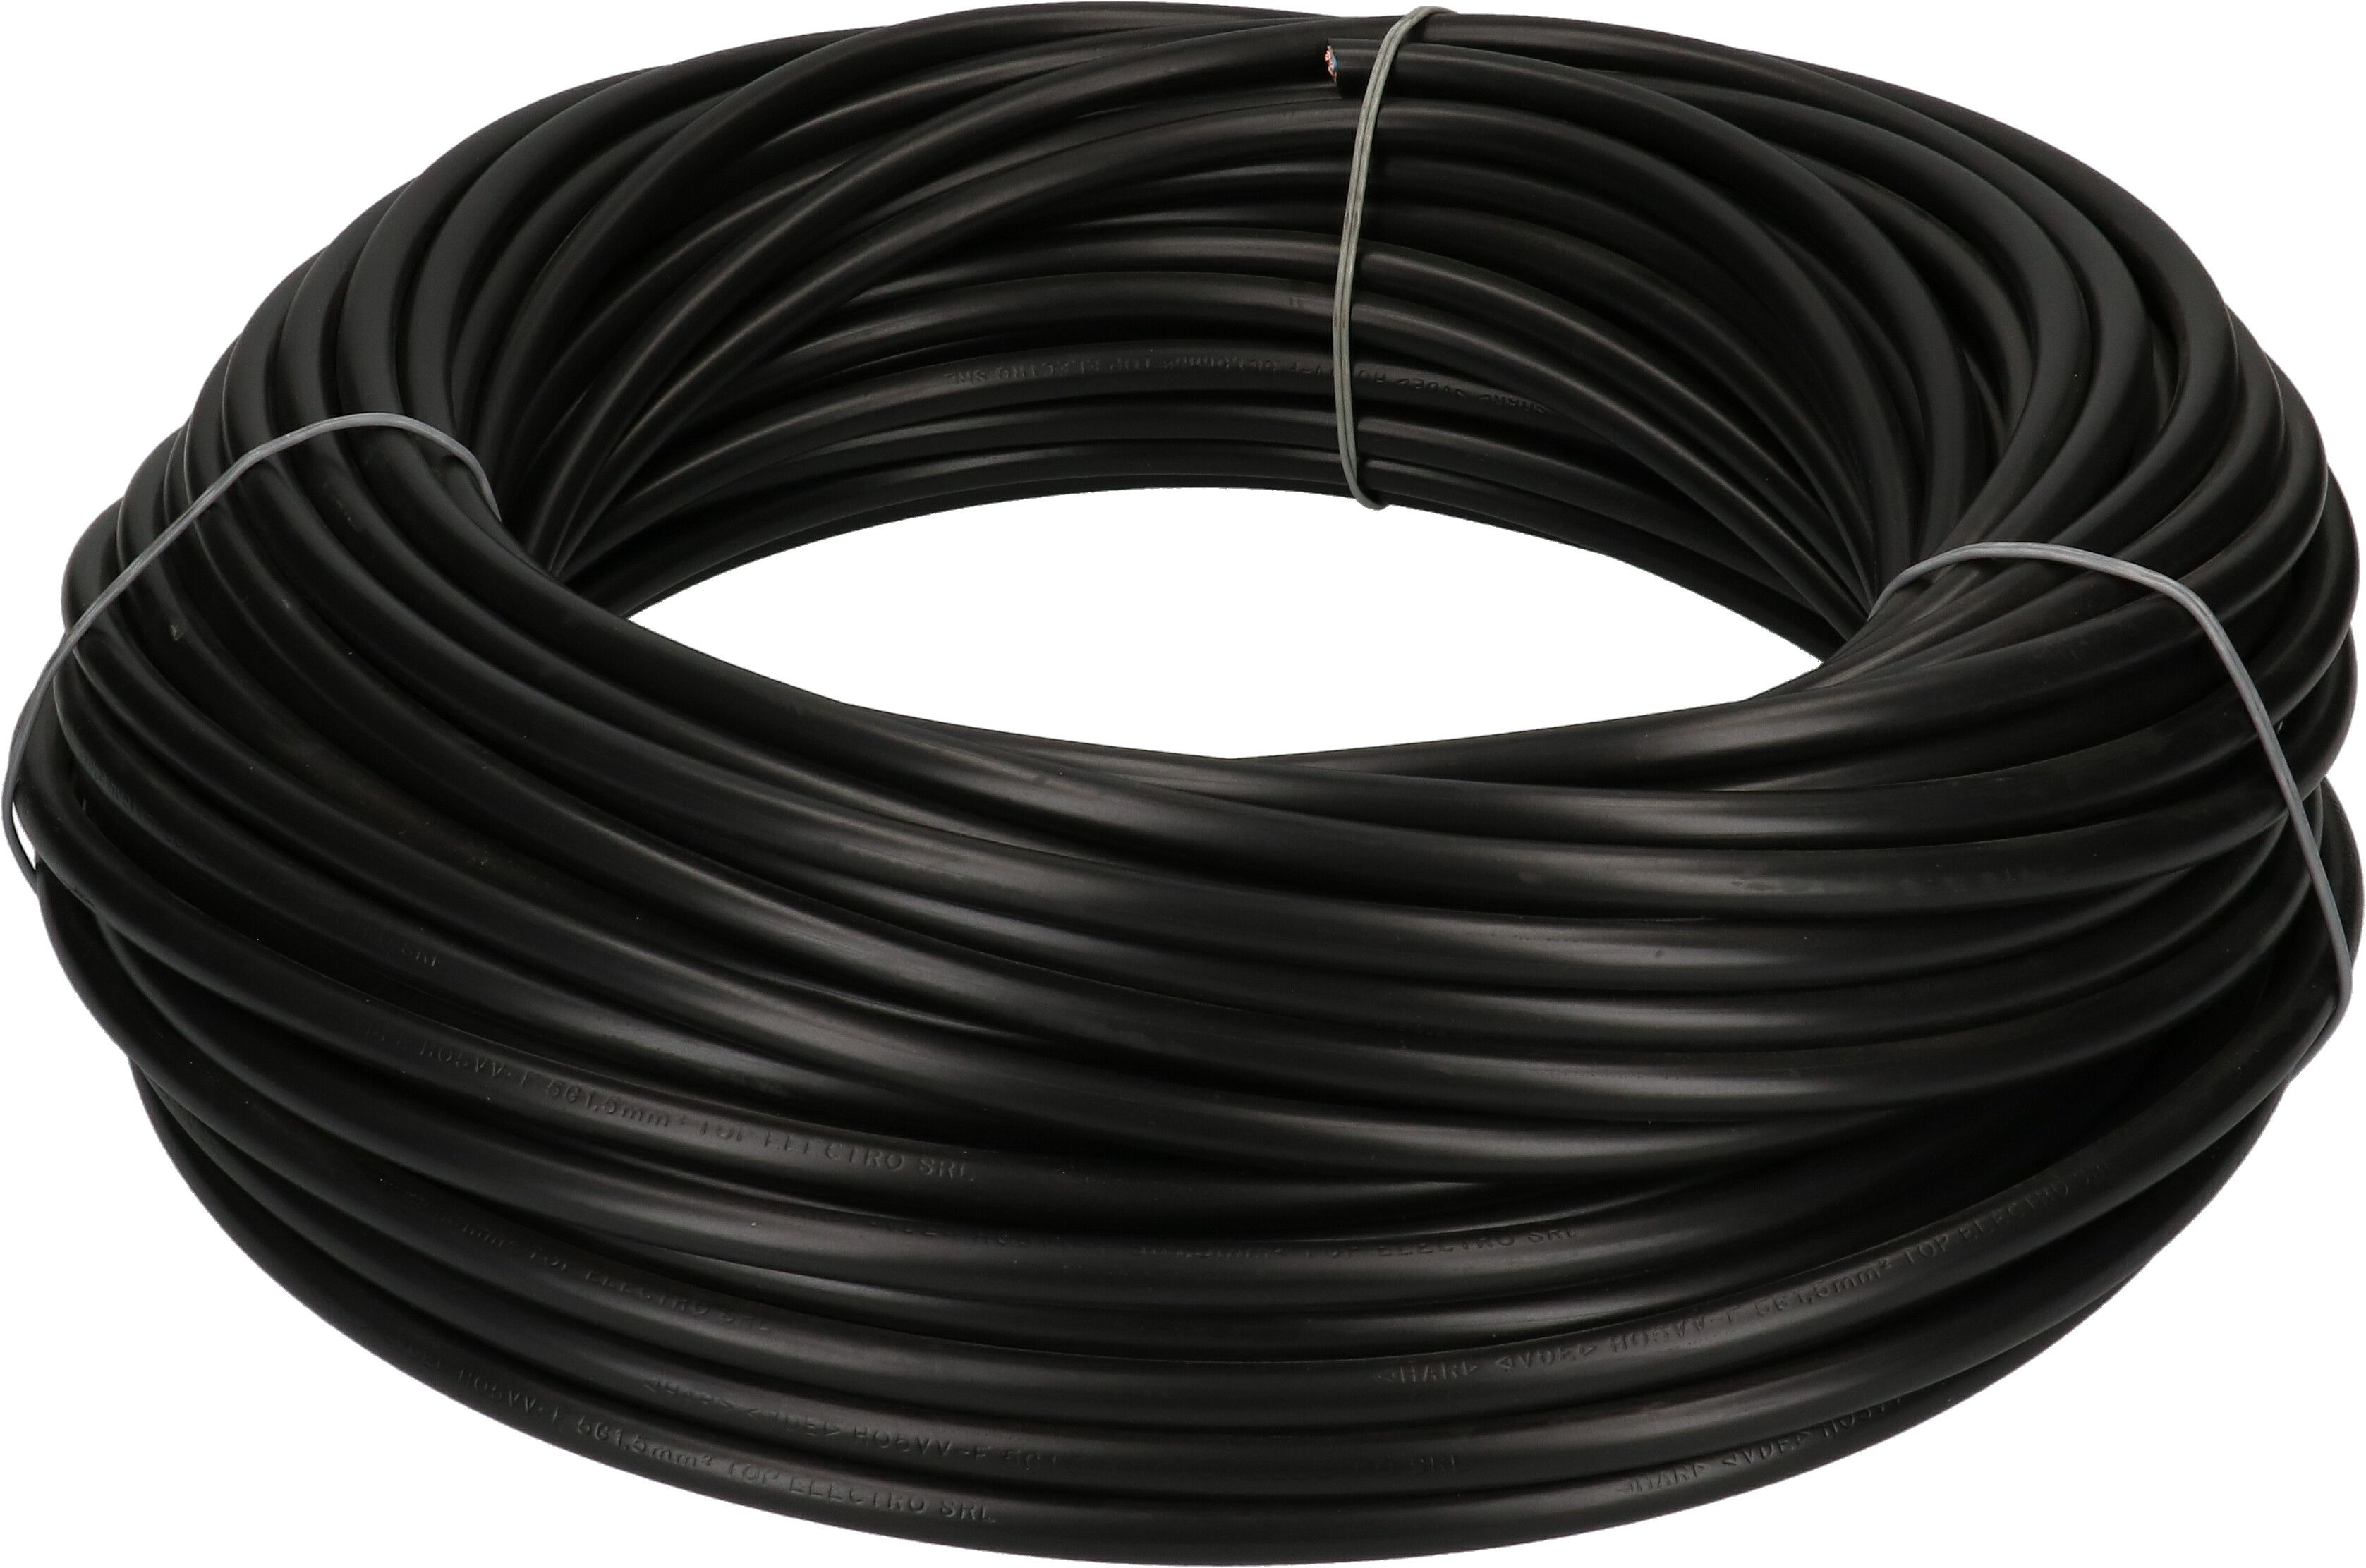 Câble TD H05VV-F5G1,5 noir